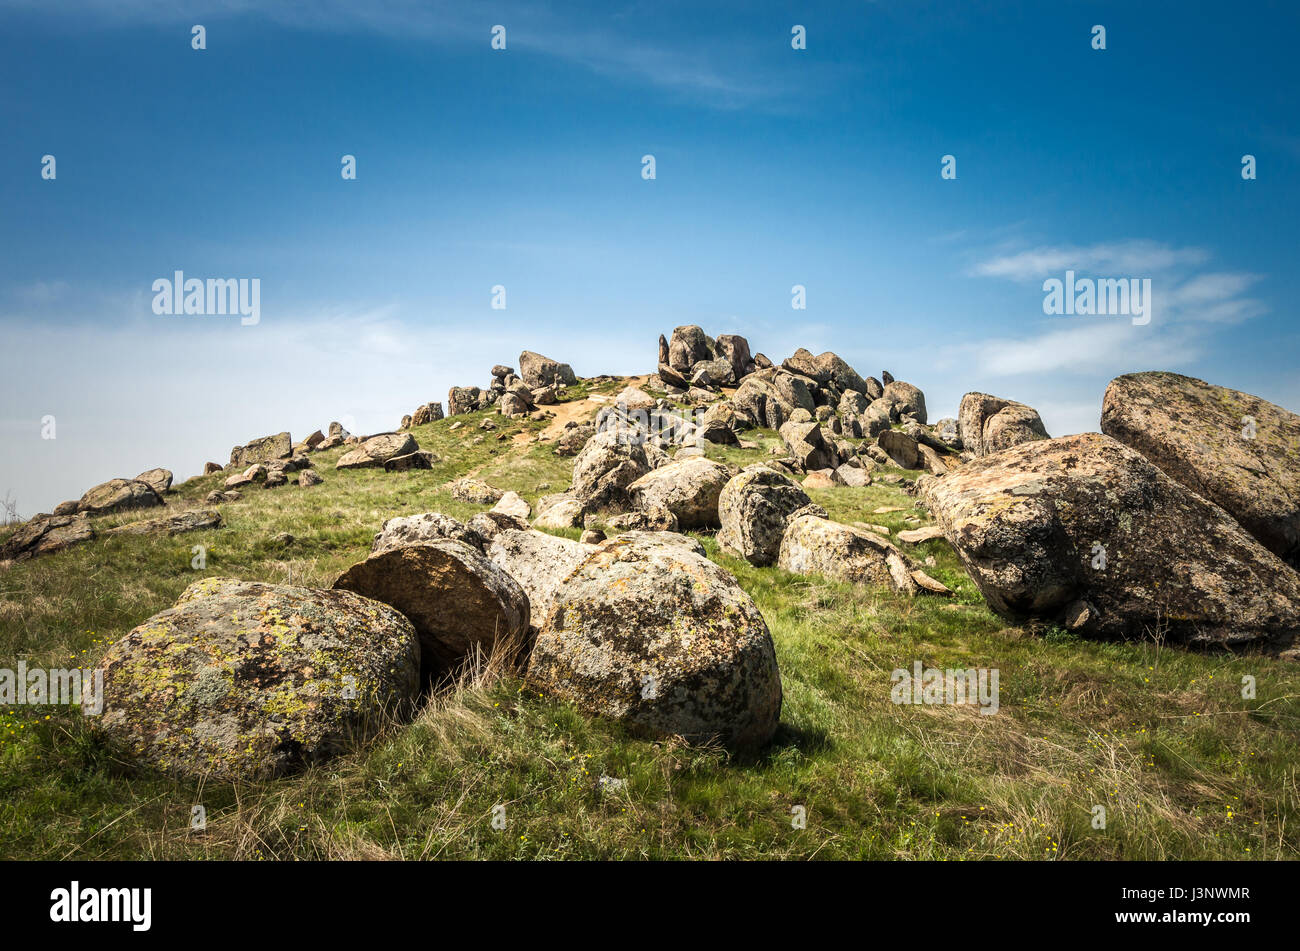 Montaña de rumania fotografías e imágenes de alta resolución - Página 10 -  Alamy